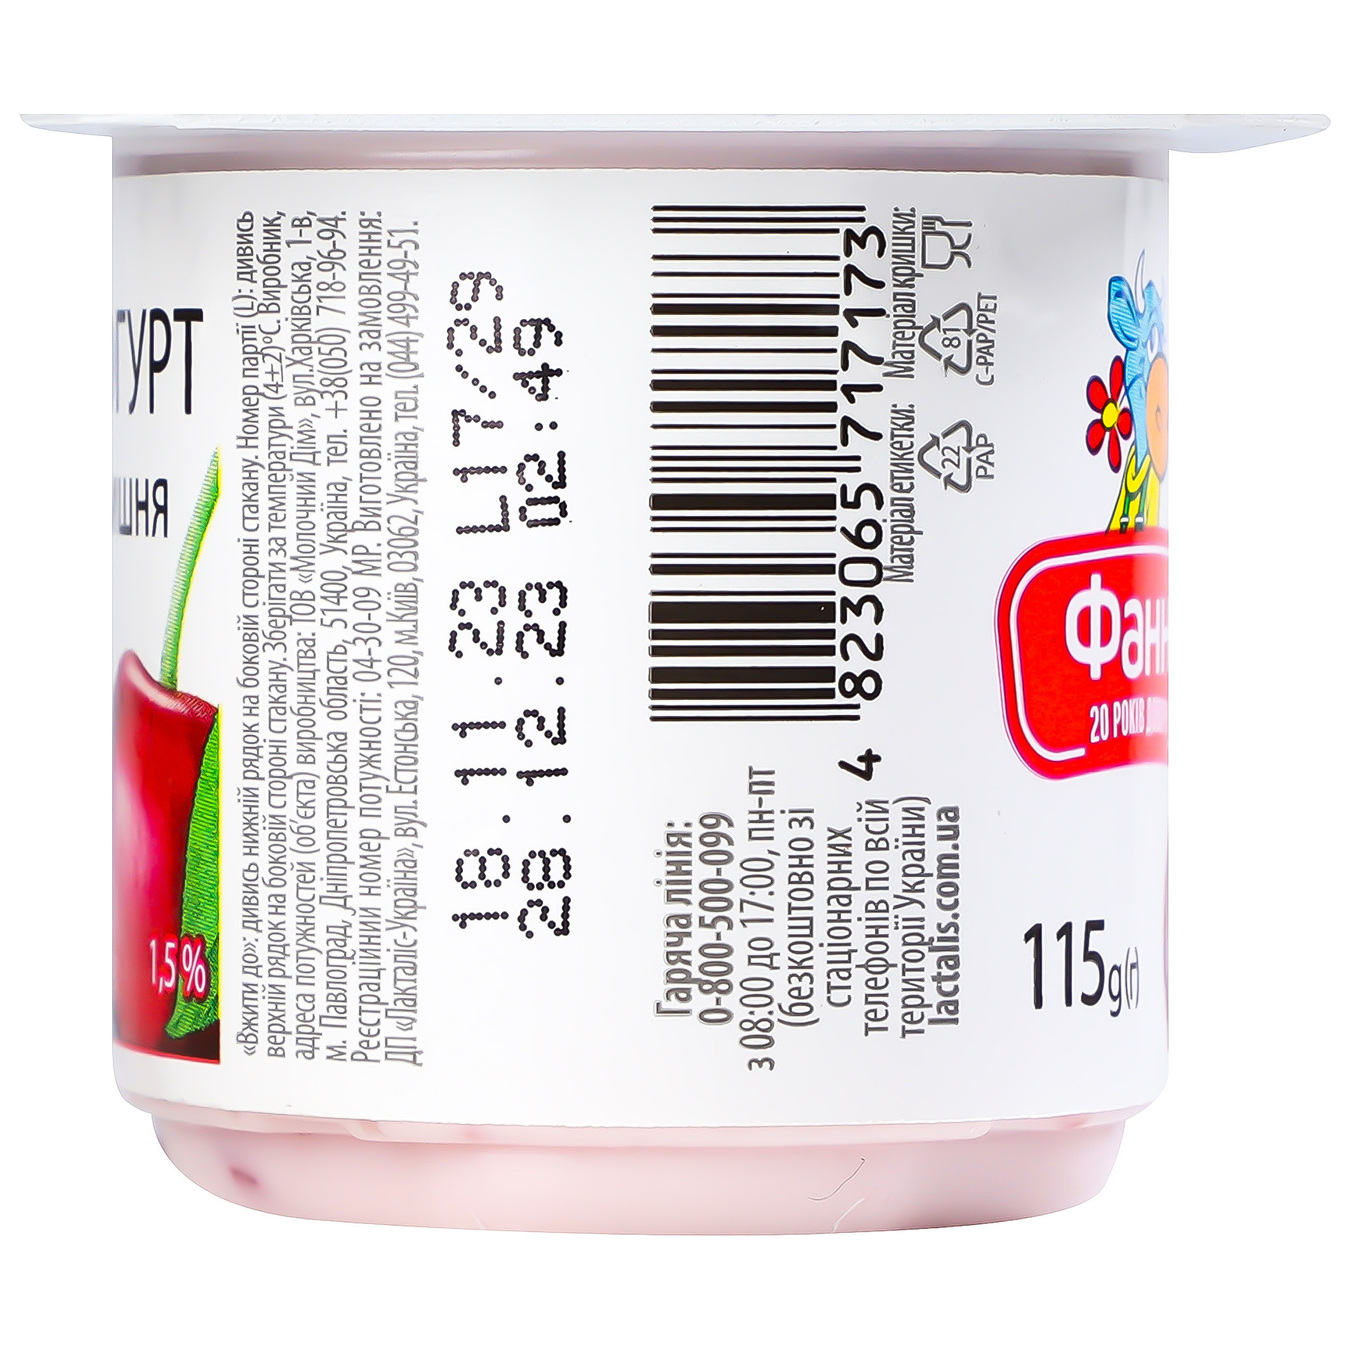 Йогурт Фанни с наполнителем вишня стаканчик 1,5% 115г 3